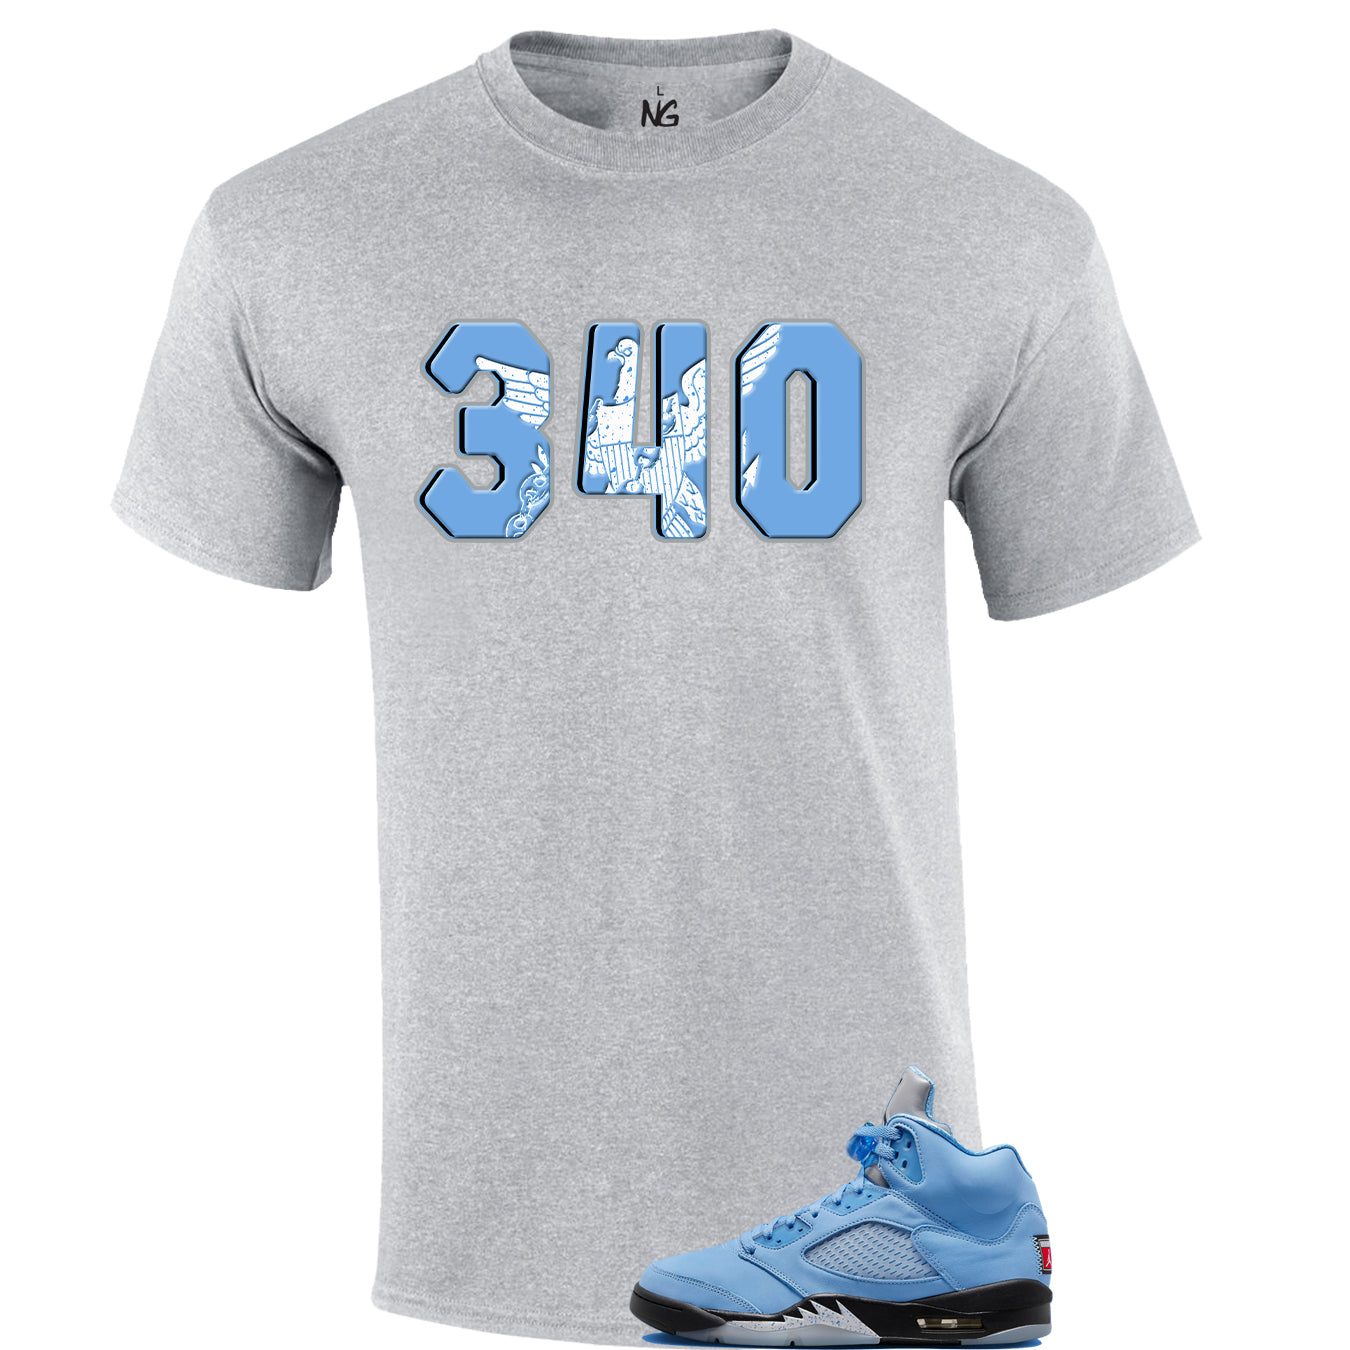 340 Sneaker Shirt (Jordan Retro UNC)